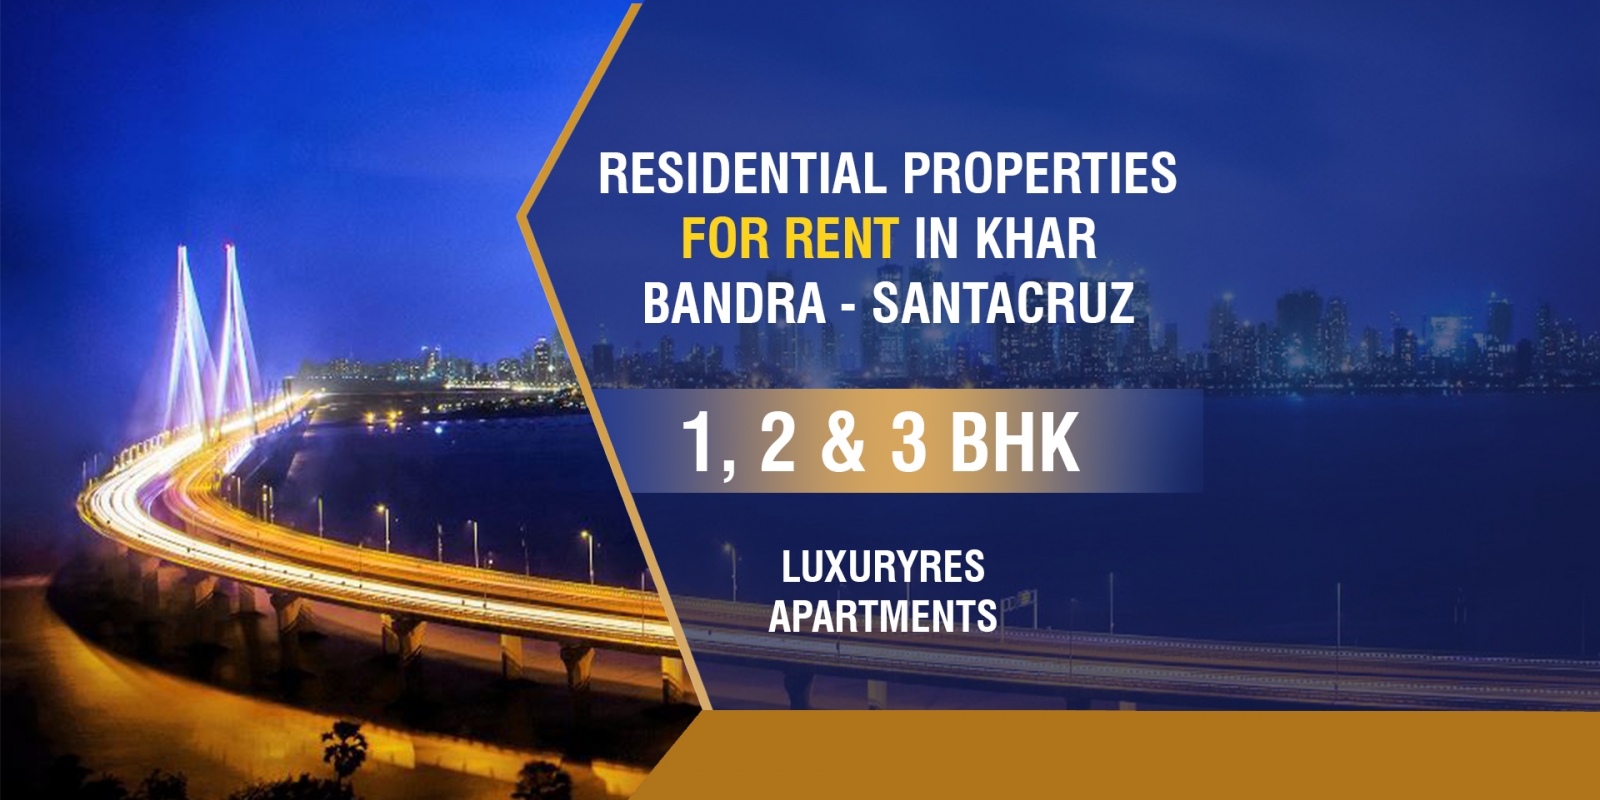 residential properties for rent in khar bandra santacruz-residenitial properties1.jpg